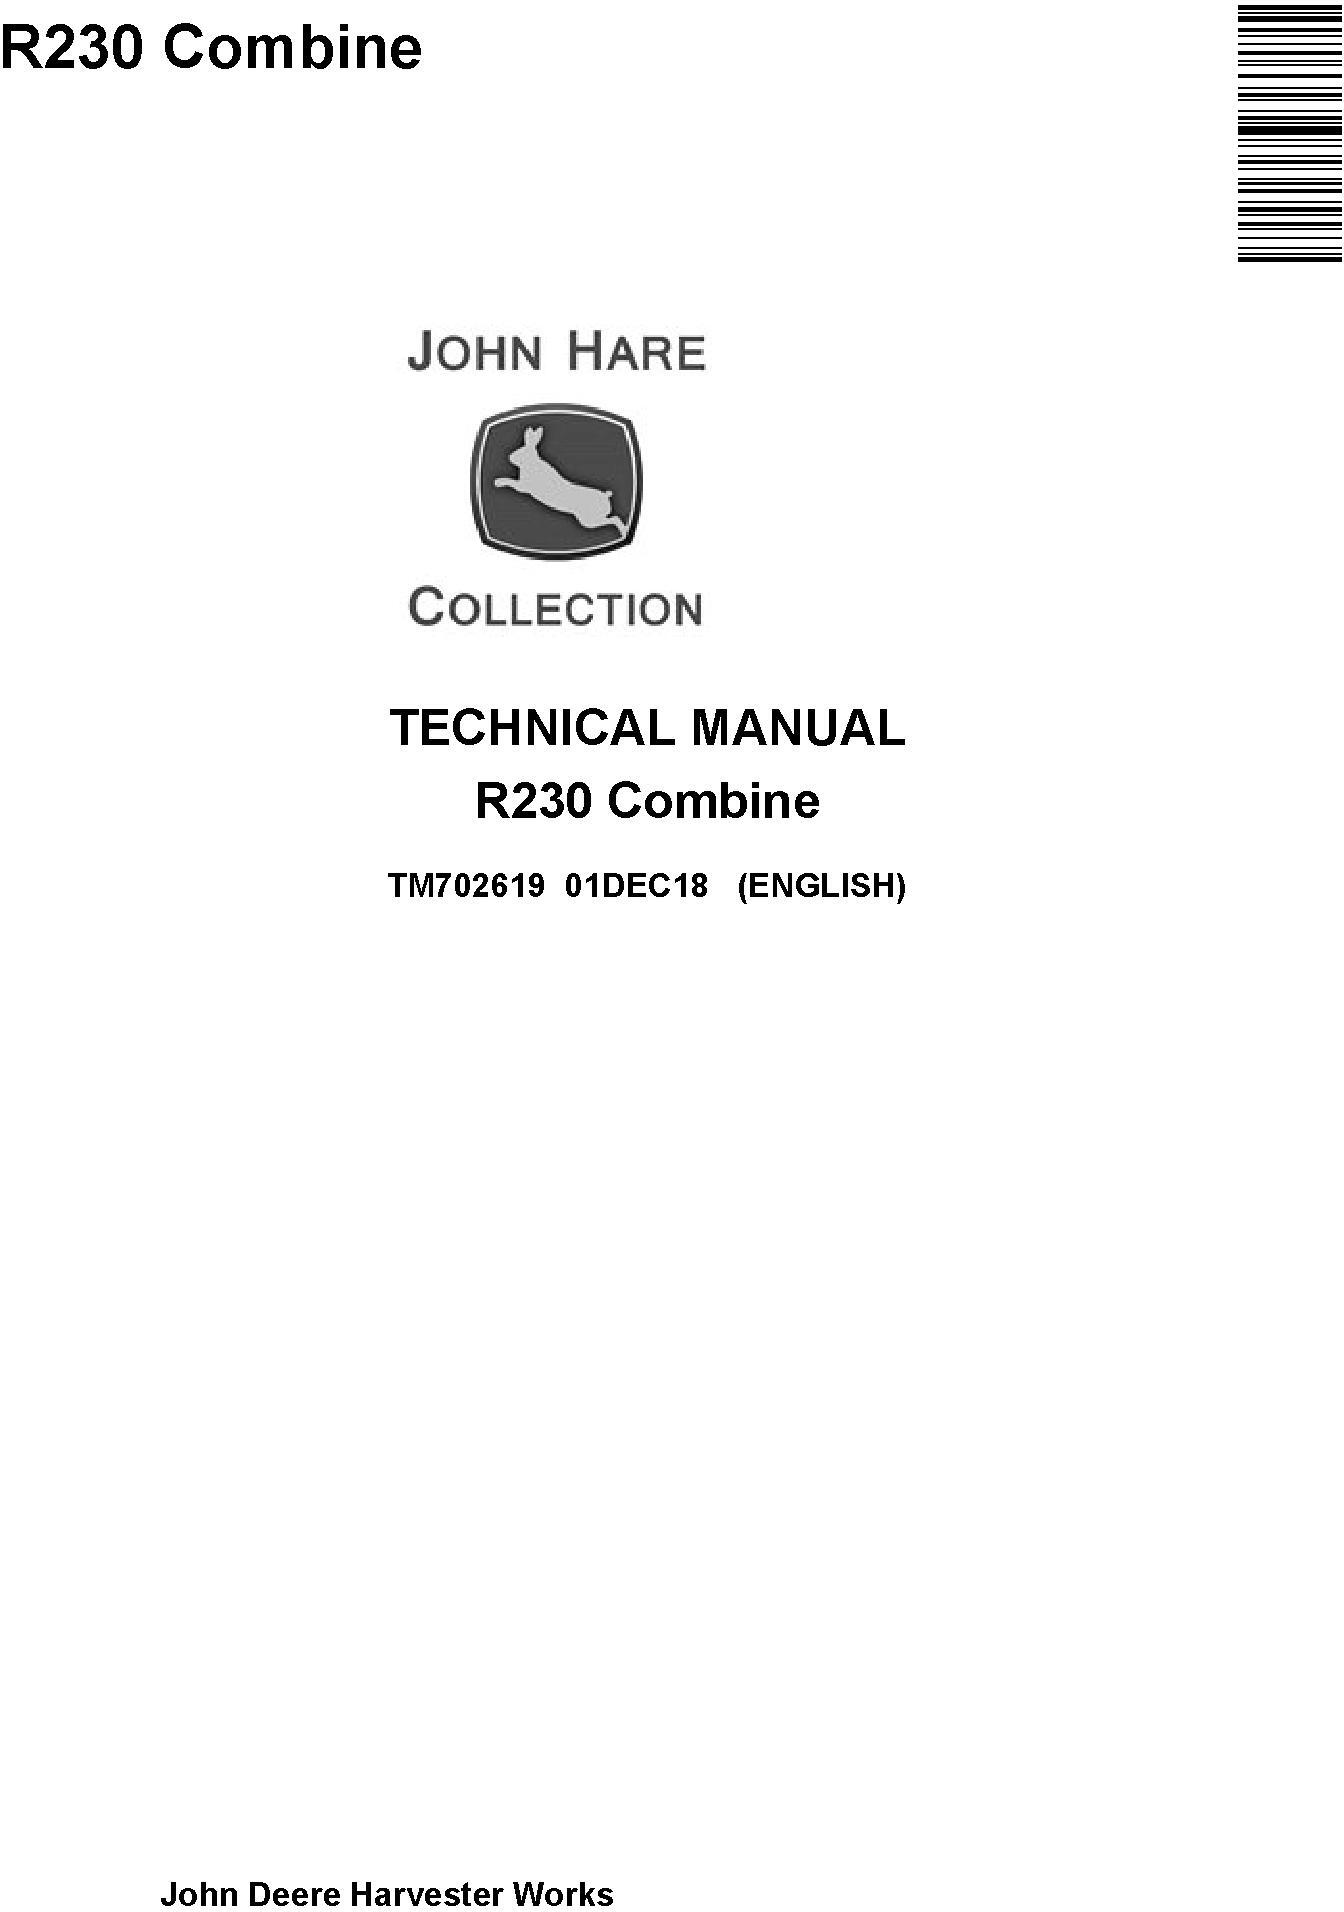 John Deere R230 Combine Technical Manual TM702619